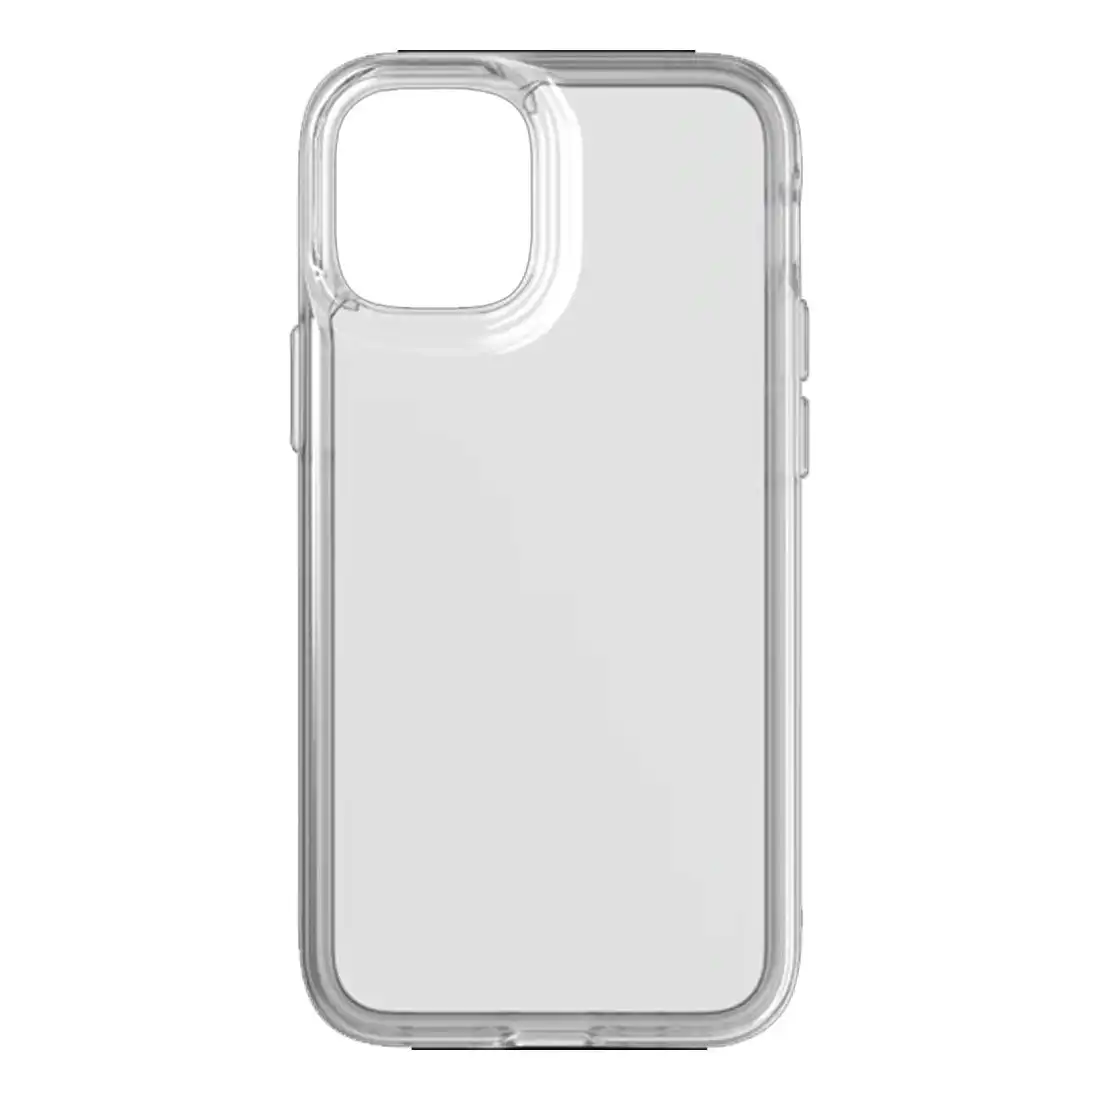 Tech21 Evo Clear Case for iPhone 12 mini T21-8357 - Clear